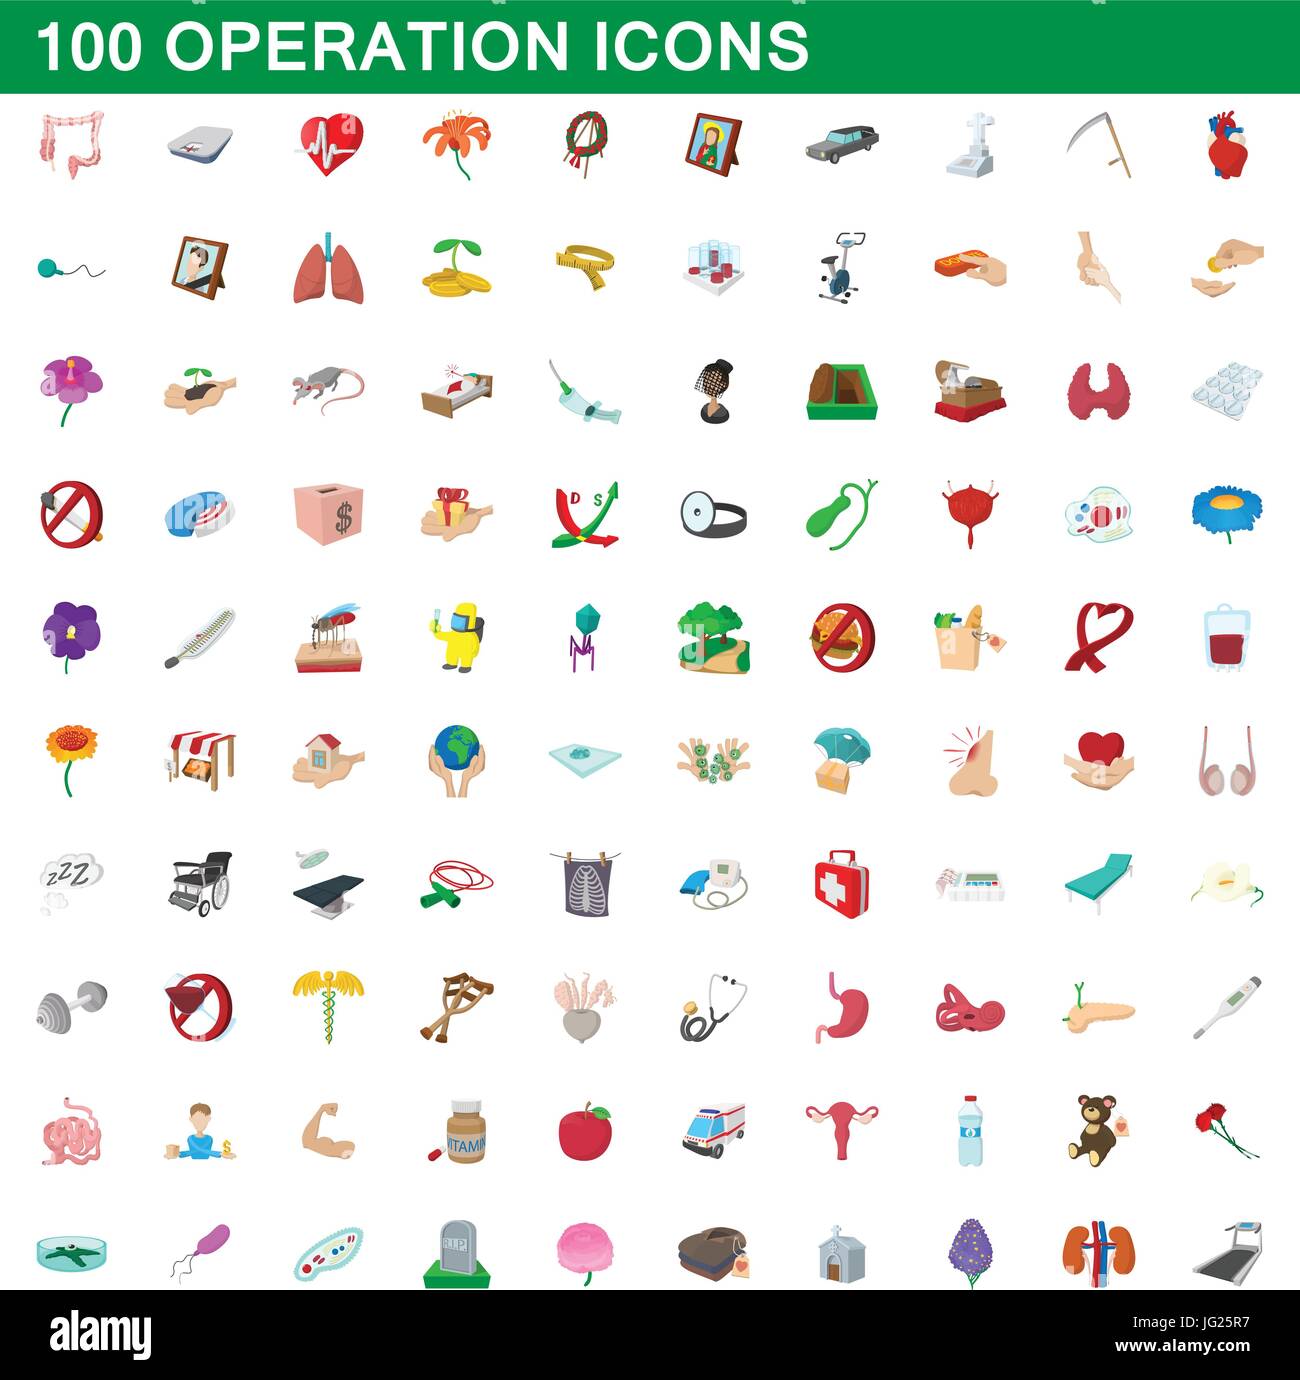 100 Symbole in Betrieb gesetzt, cartoon-Stil Stock Vektor